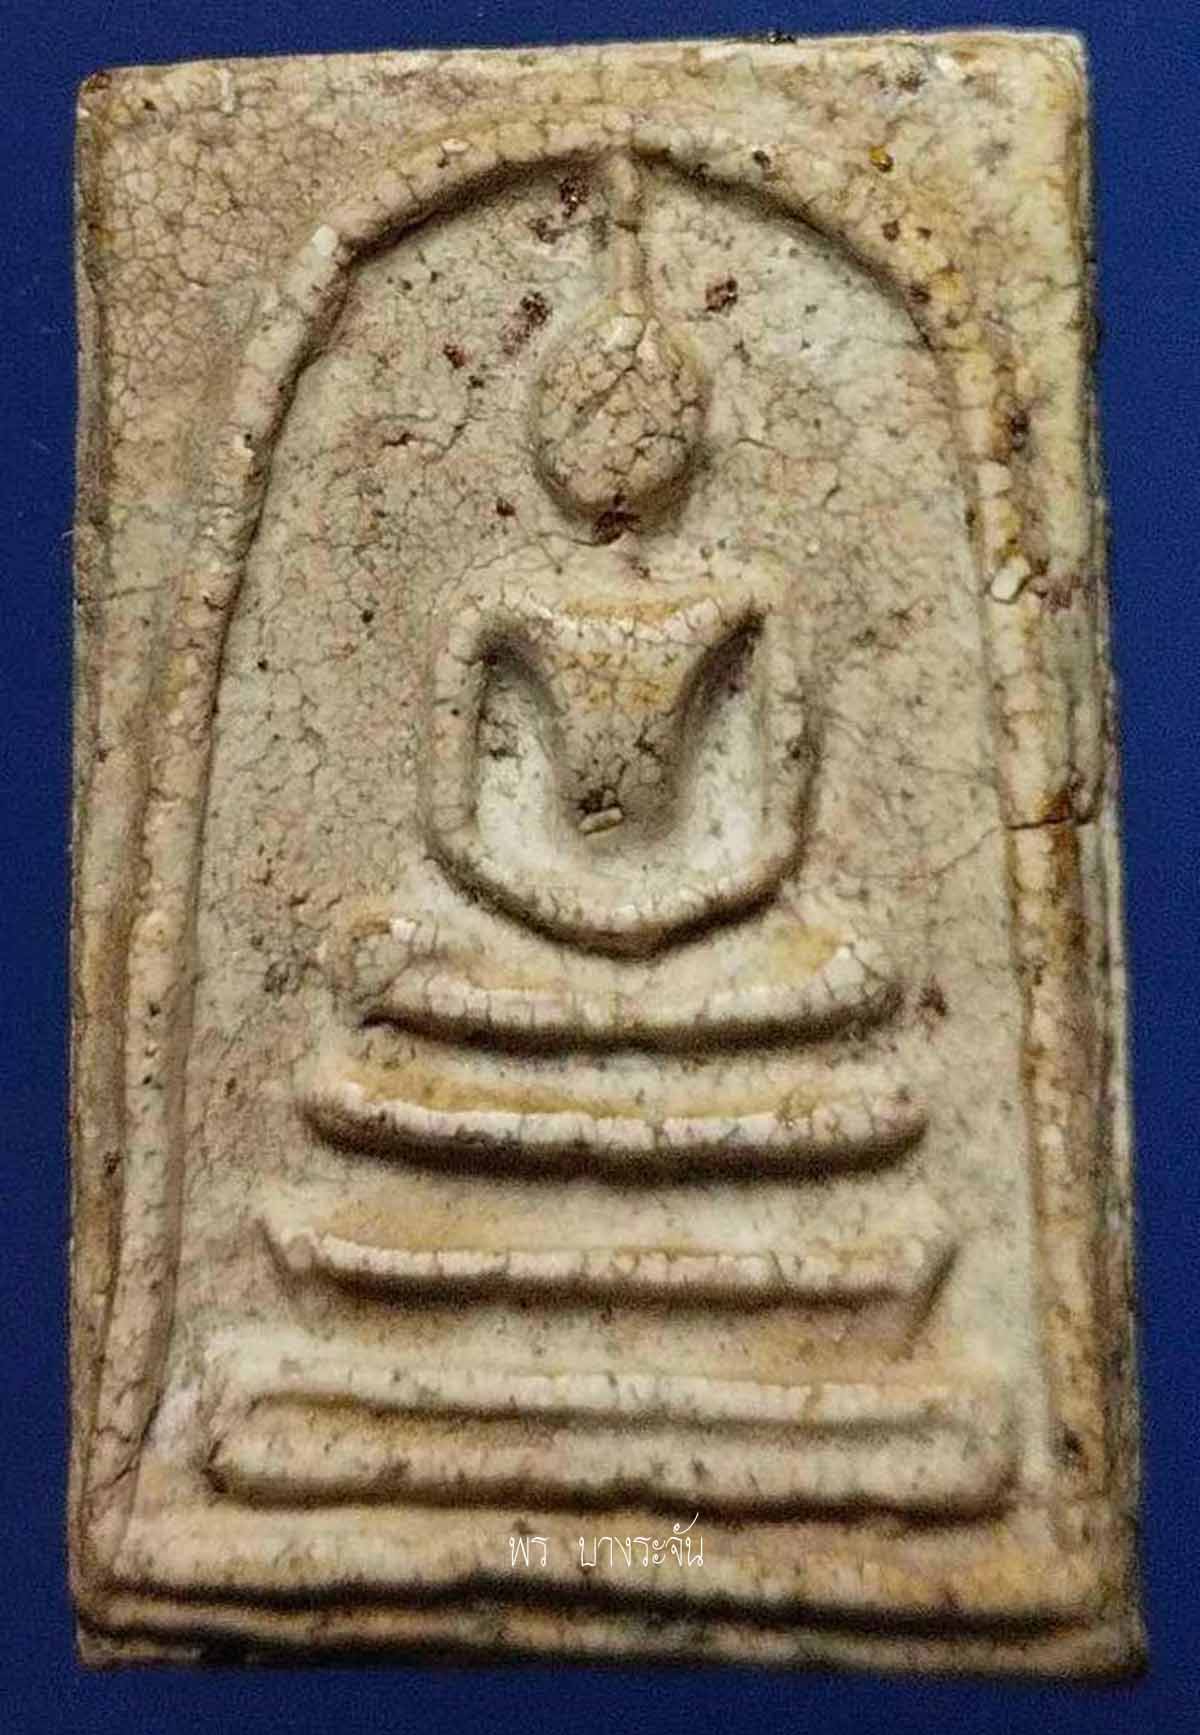 King of all Thai Amulets  Pra Somdej Wat Rakang by Somdej Pra Puttajarn (Dto) Prohmrangsri.(勇)